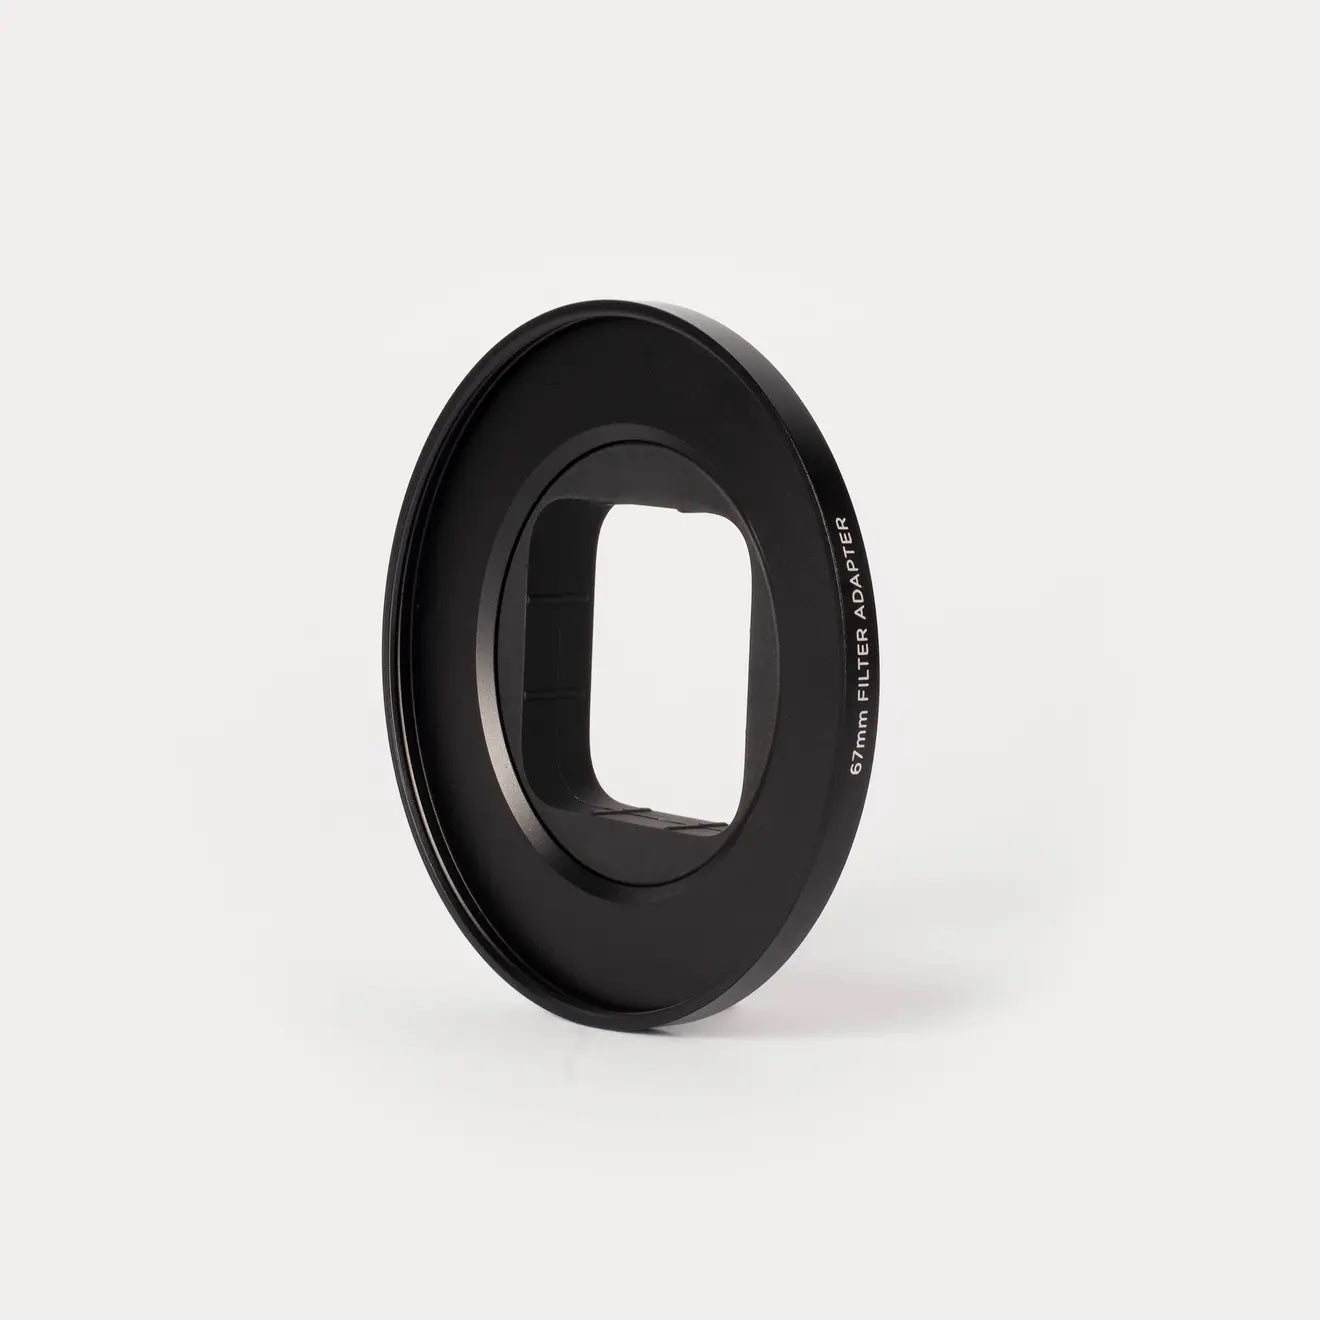 67mm Lens Filter Mount Adapter